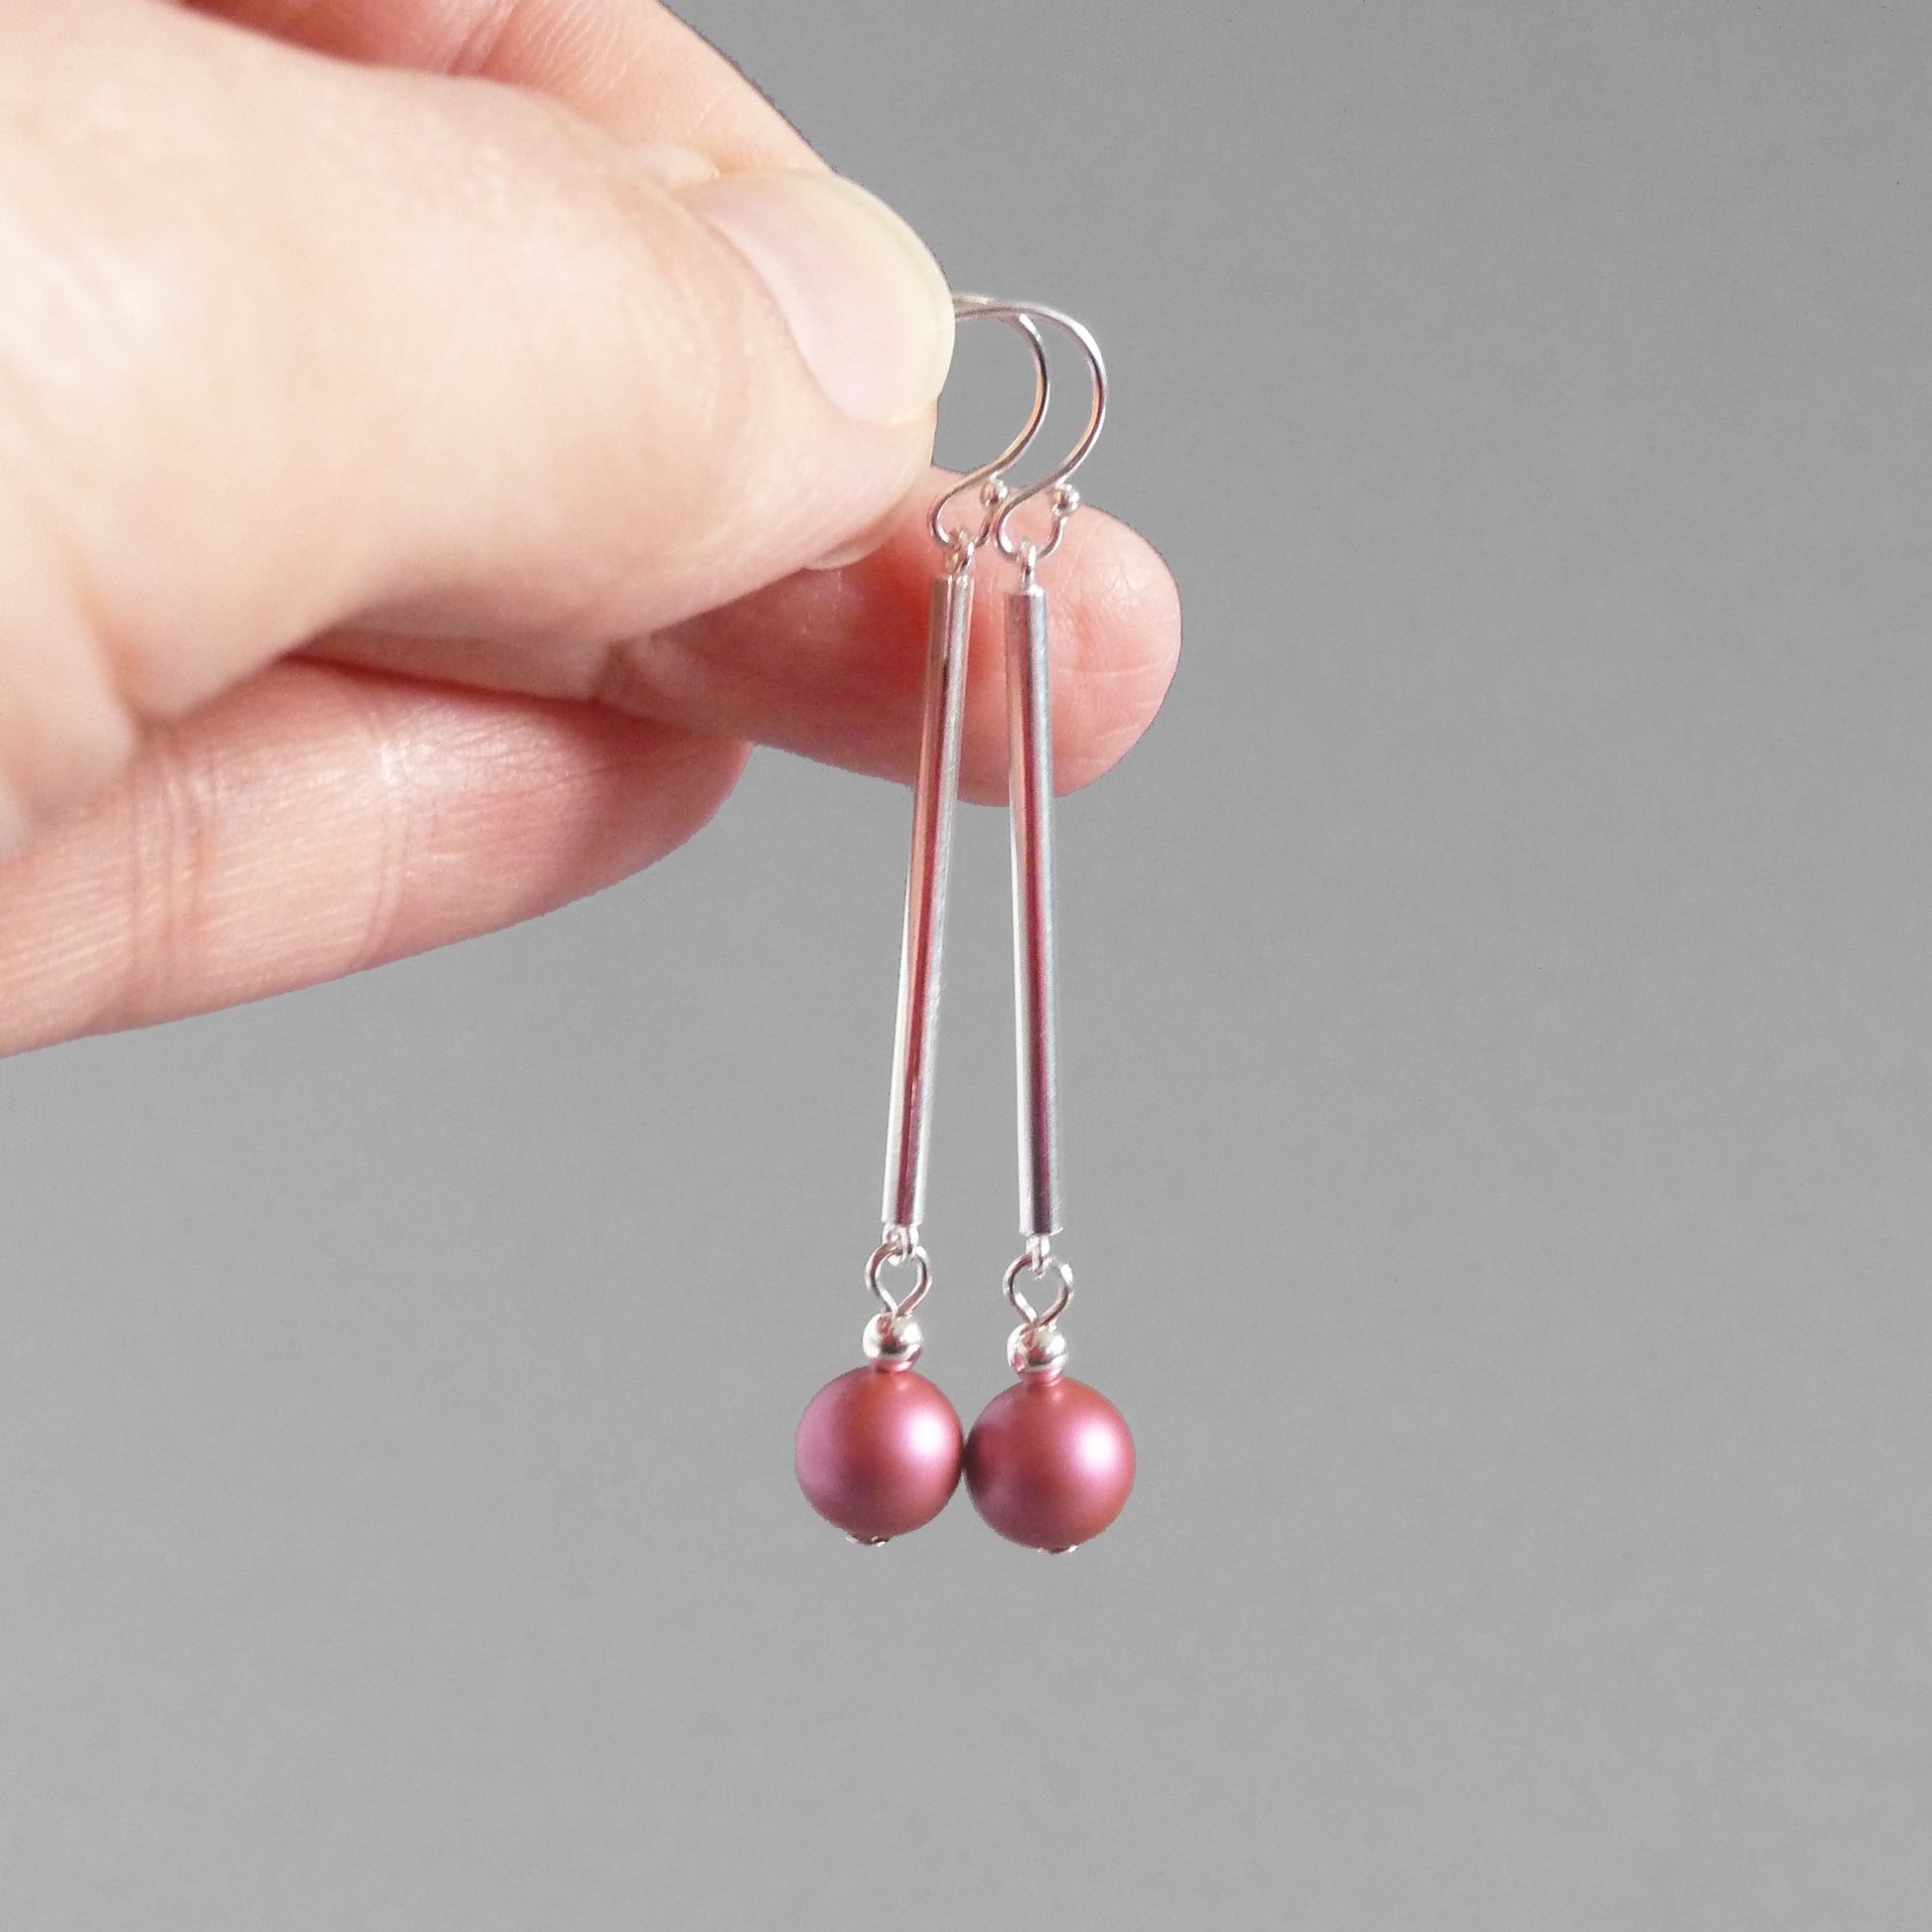 Fuchsia pink earrings with silver hooks